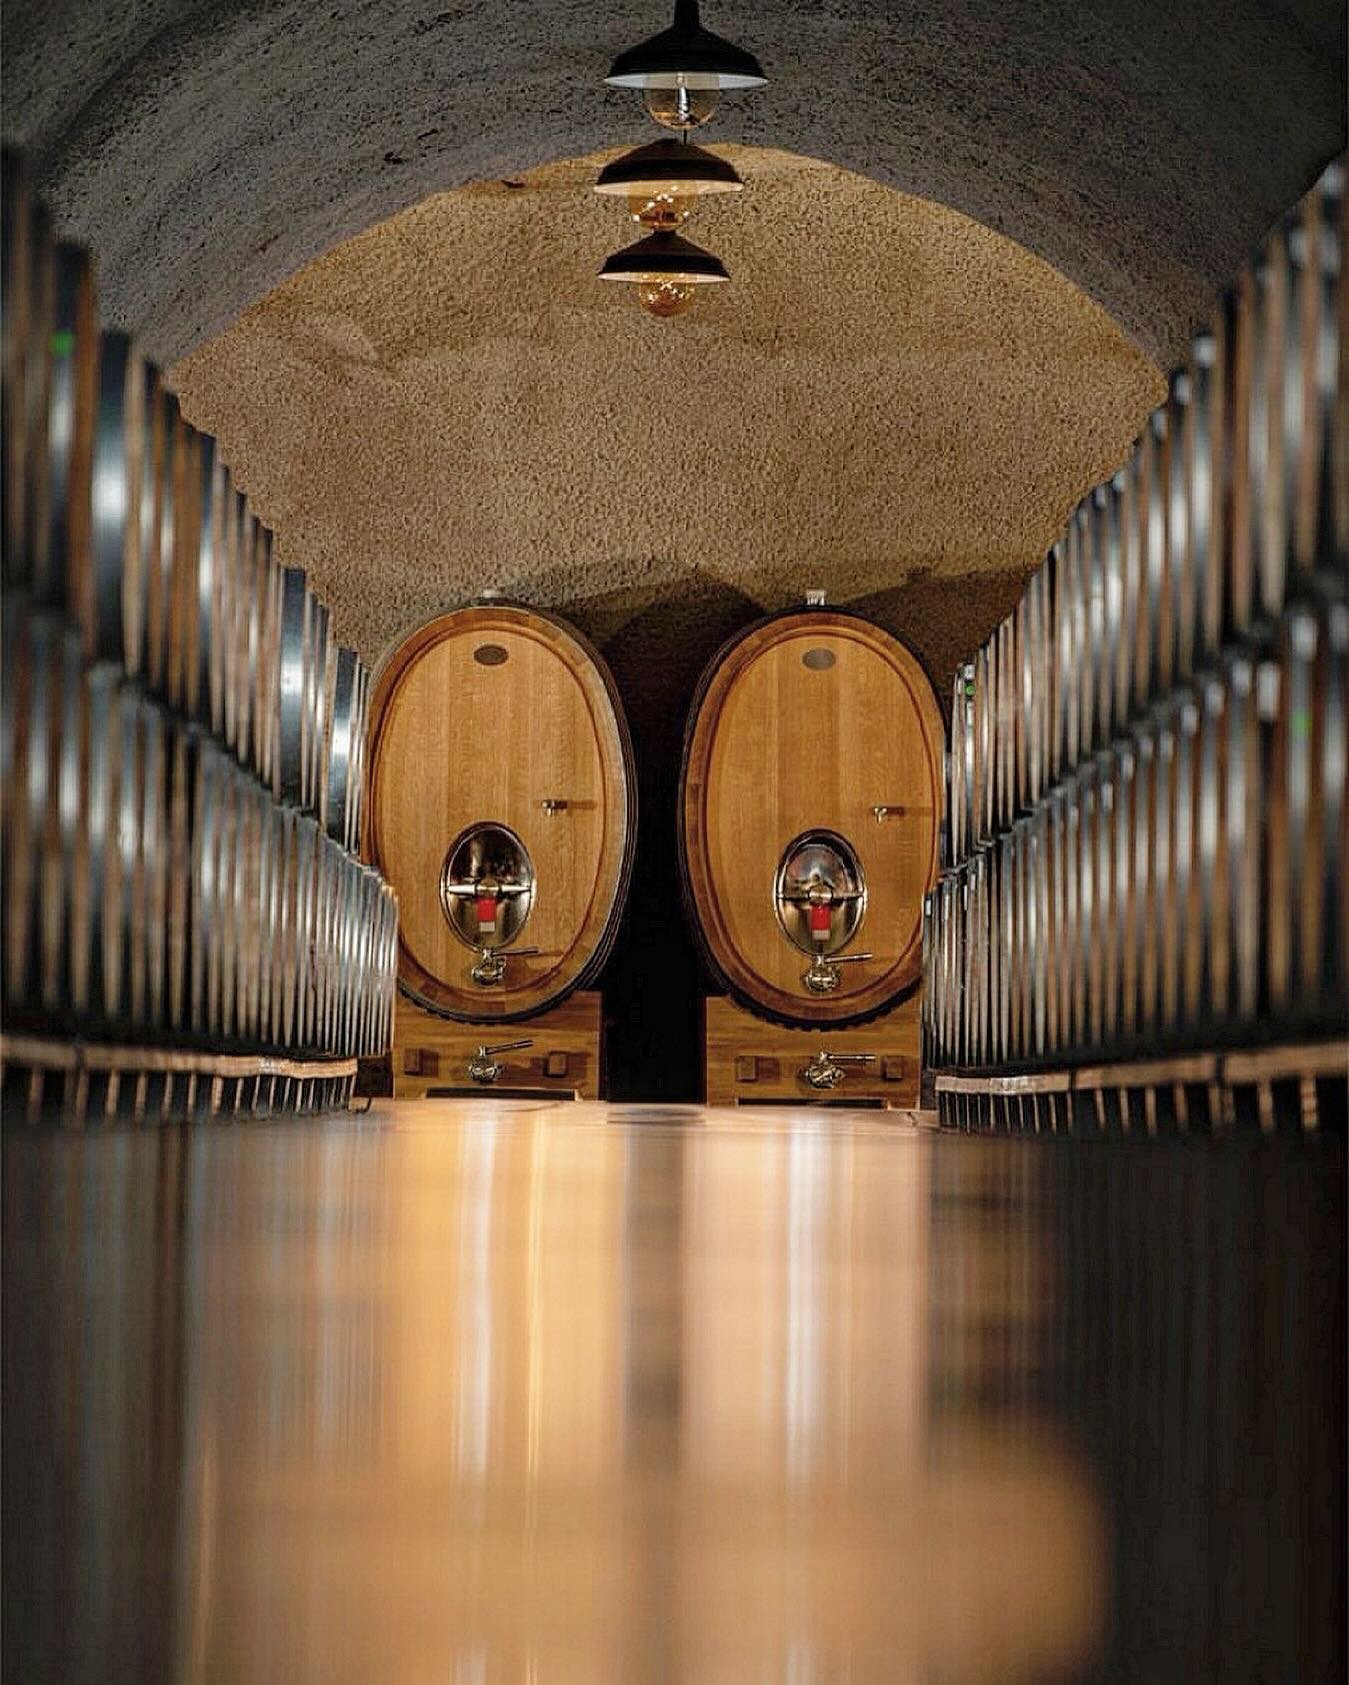 The cellar at @nealvineyards in the heart of the heart of Howell Mountain&hellip; 👀 
.
📸: @mark.jack.neal 
.
.
.
#wine #winelover #vineyard #winerylife #winespectator #winetime #winemaker #winelineup #californiawines #winespectatortop100 #winetime?